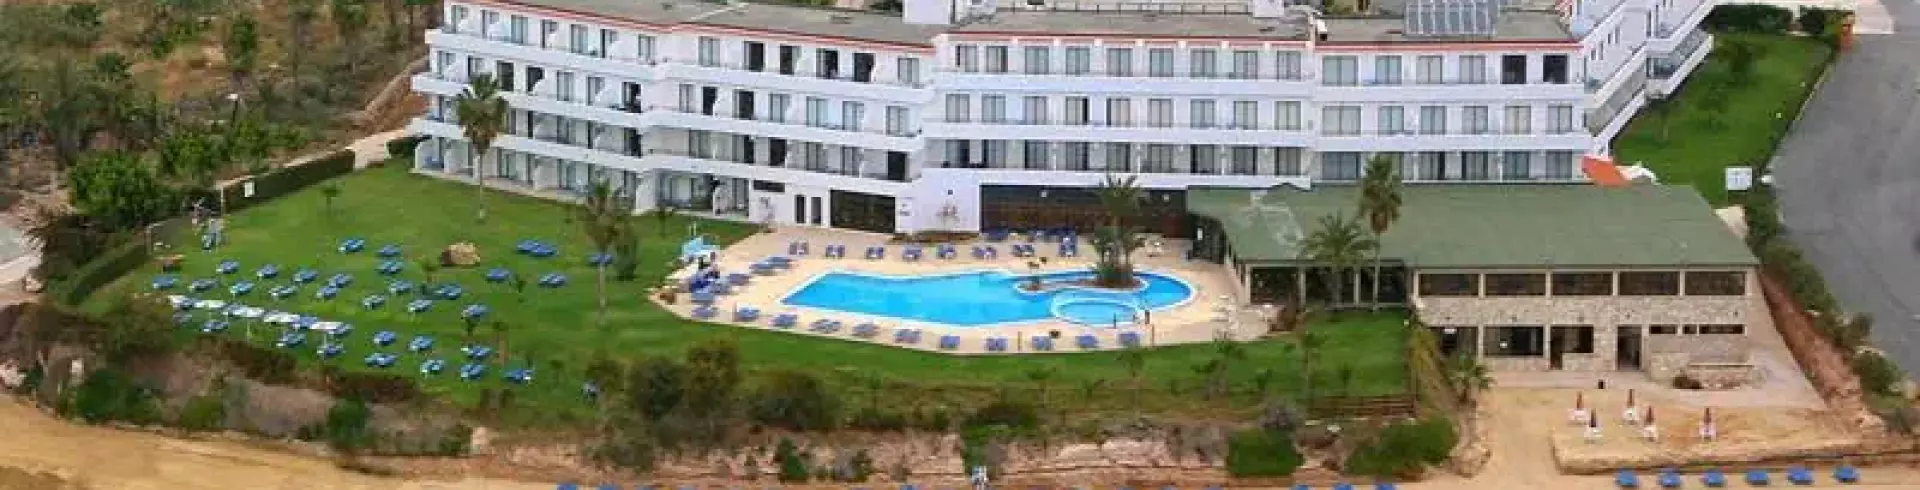 Corallia Hotel Apartments